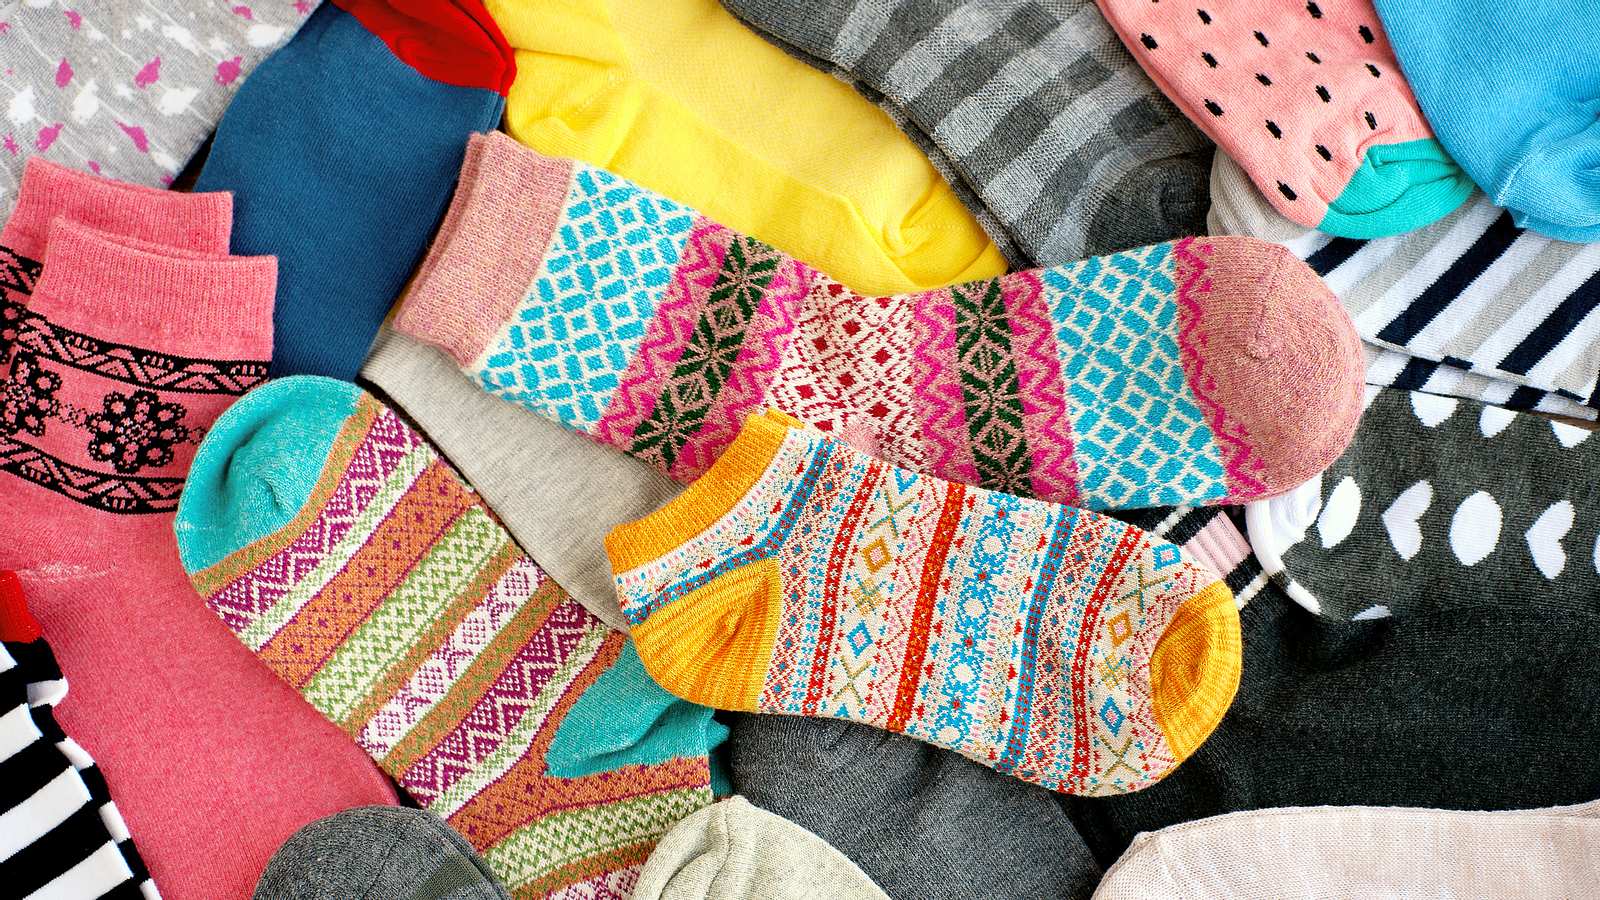 soxo bunte Herren Socken/lustige Verpackung Konservendose/lustige hohe Baumwollsocken/Geschenkidee/Socken mit Essensmotiv